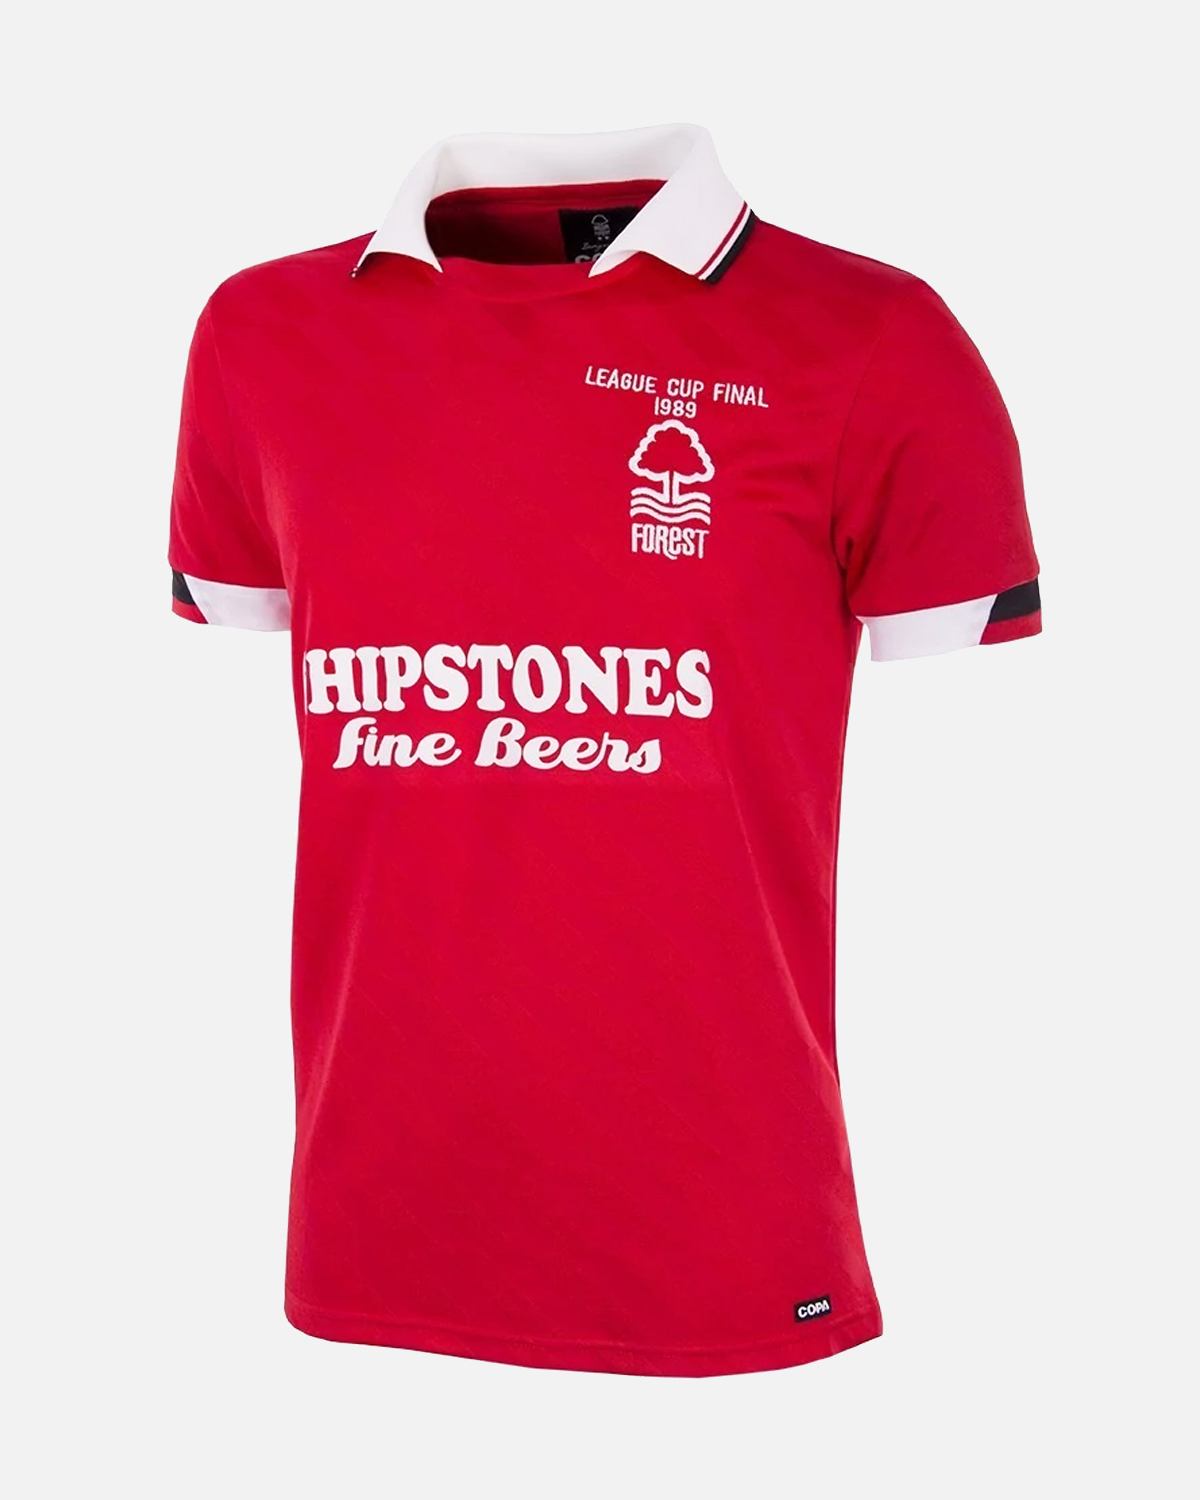 Nottingham Forest 1993 Third Camiseta de Fútbol Retro, Comprar En Línea